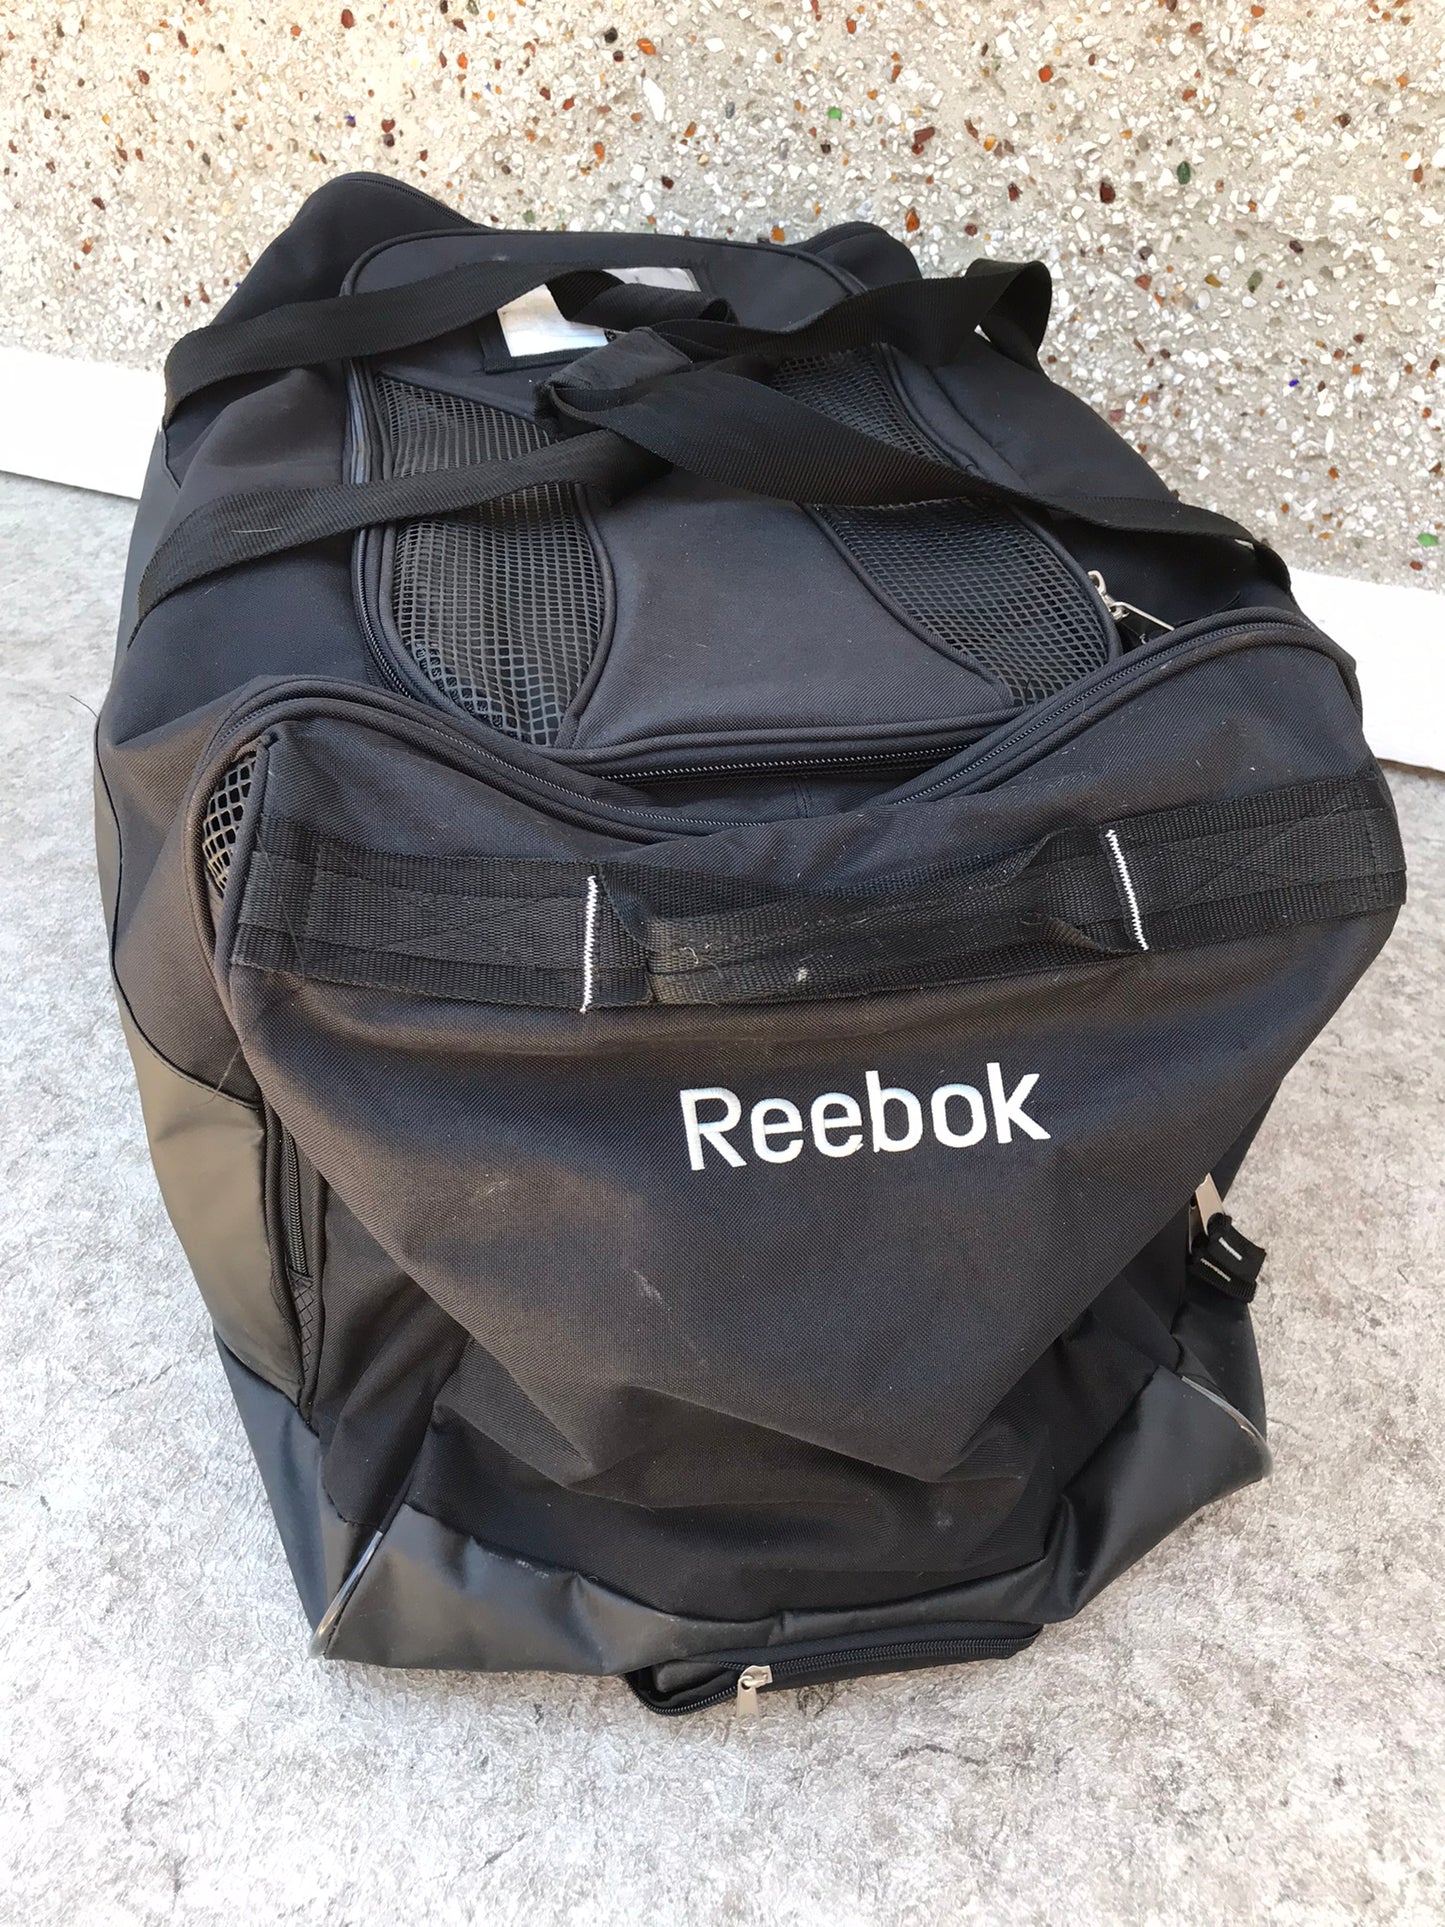 Hockey Bag Junior Size Reebok Black On Wheels